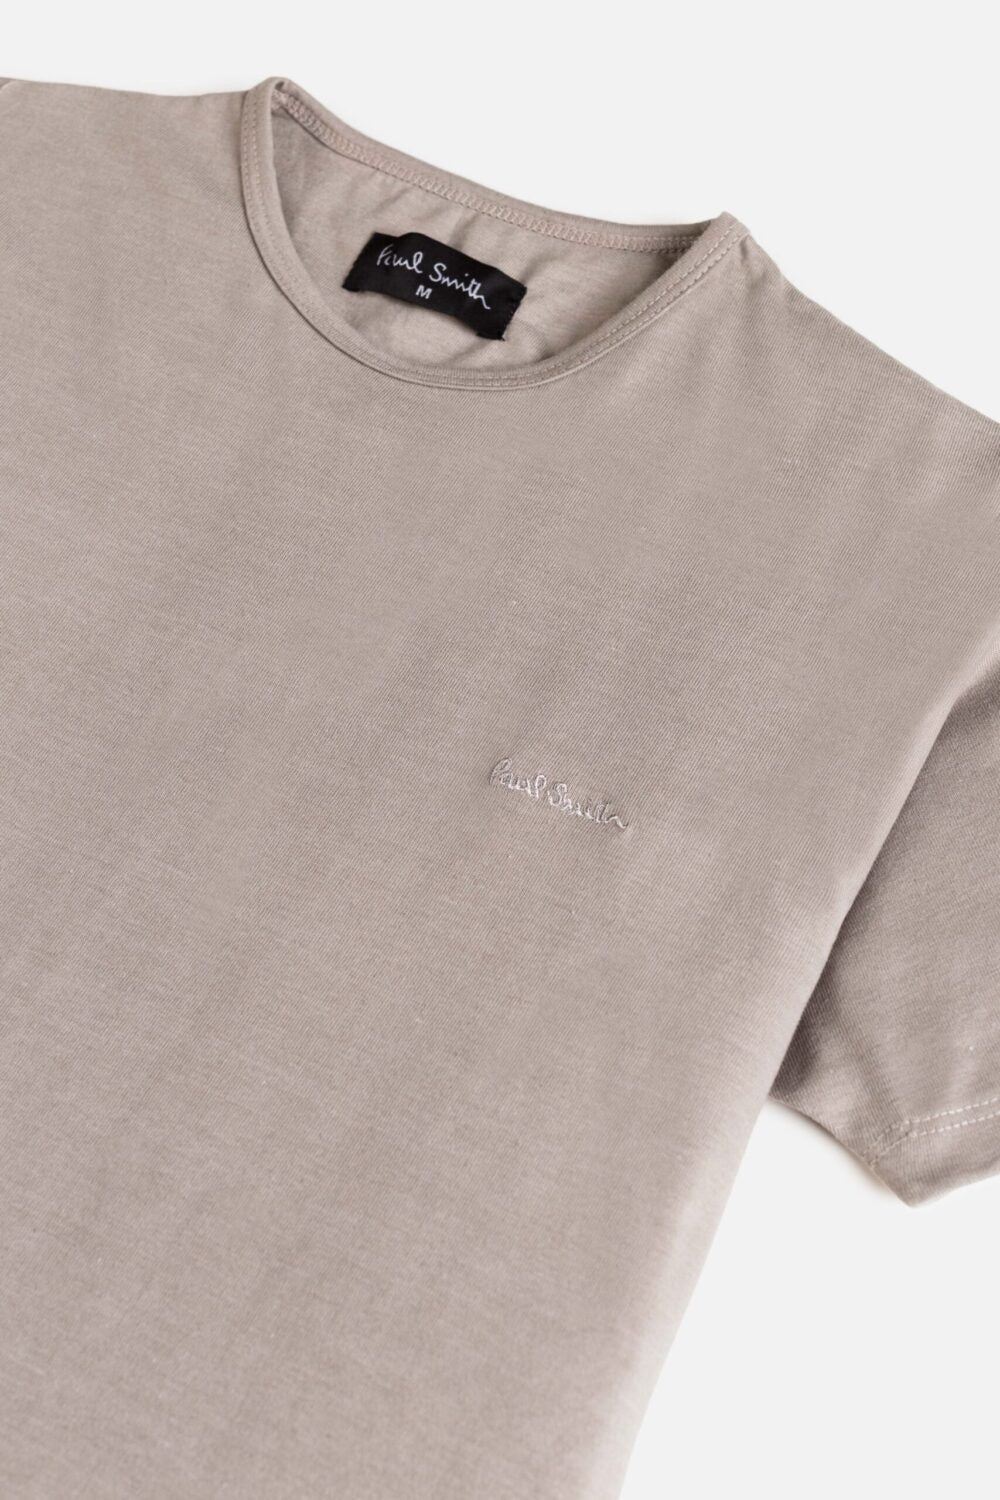 Paul Smith Original Cotton T Shirt – Abalone